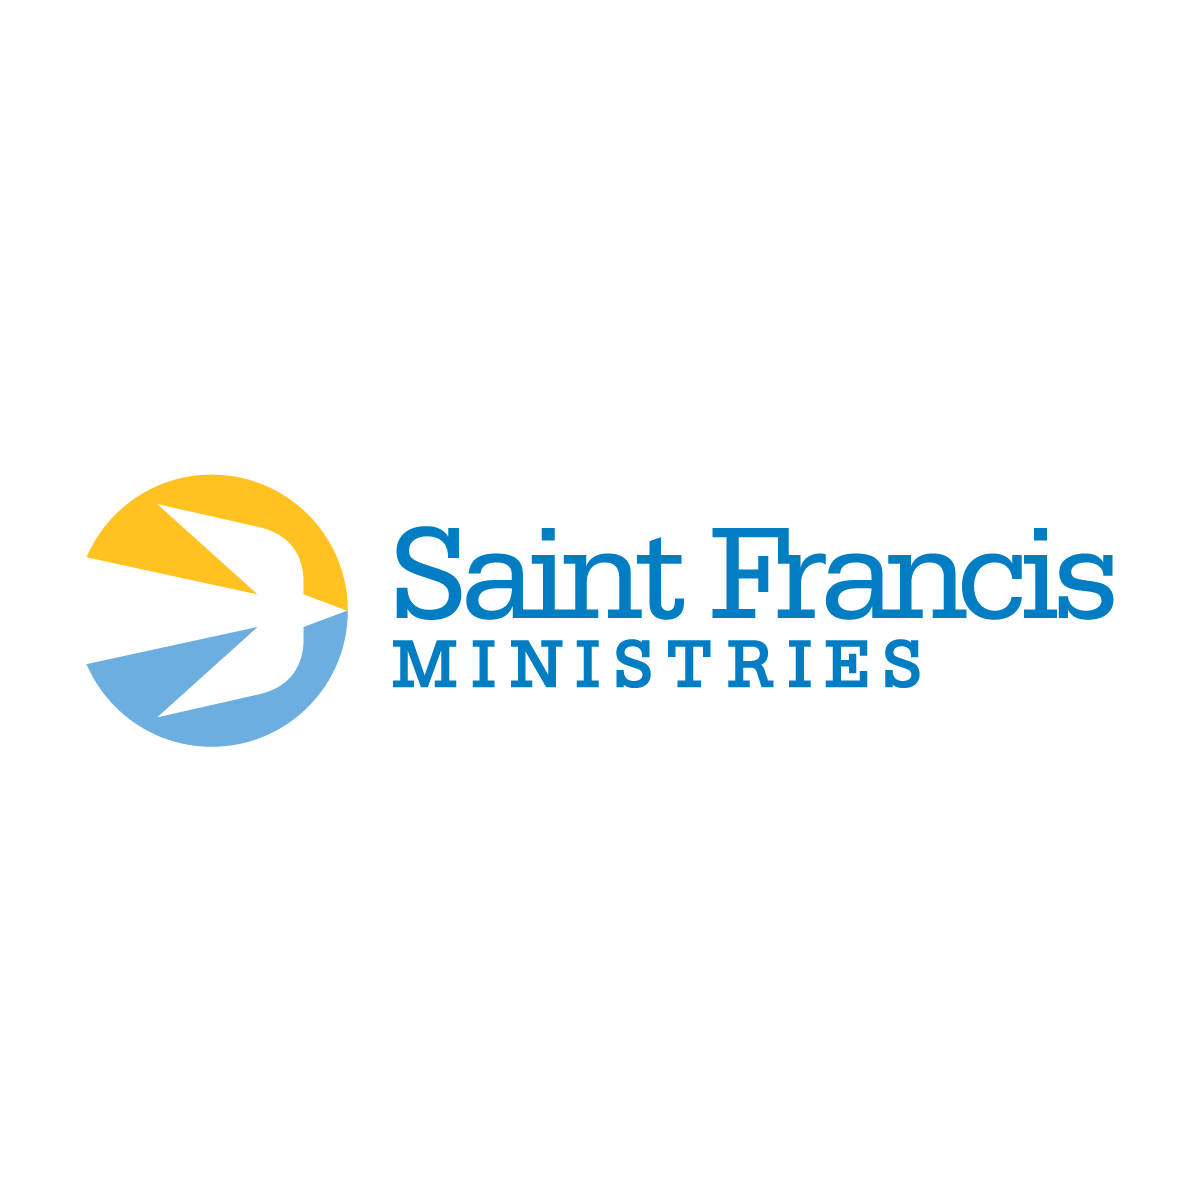 Saint Francis Ministries (10589)